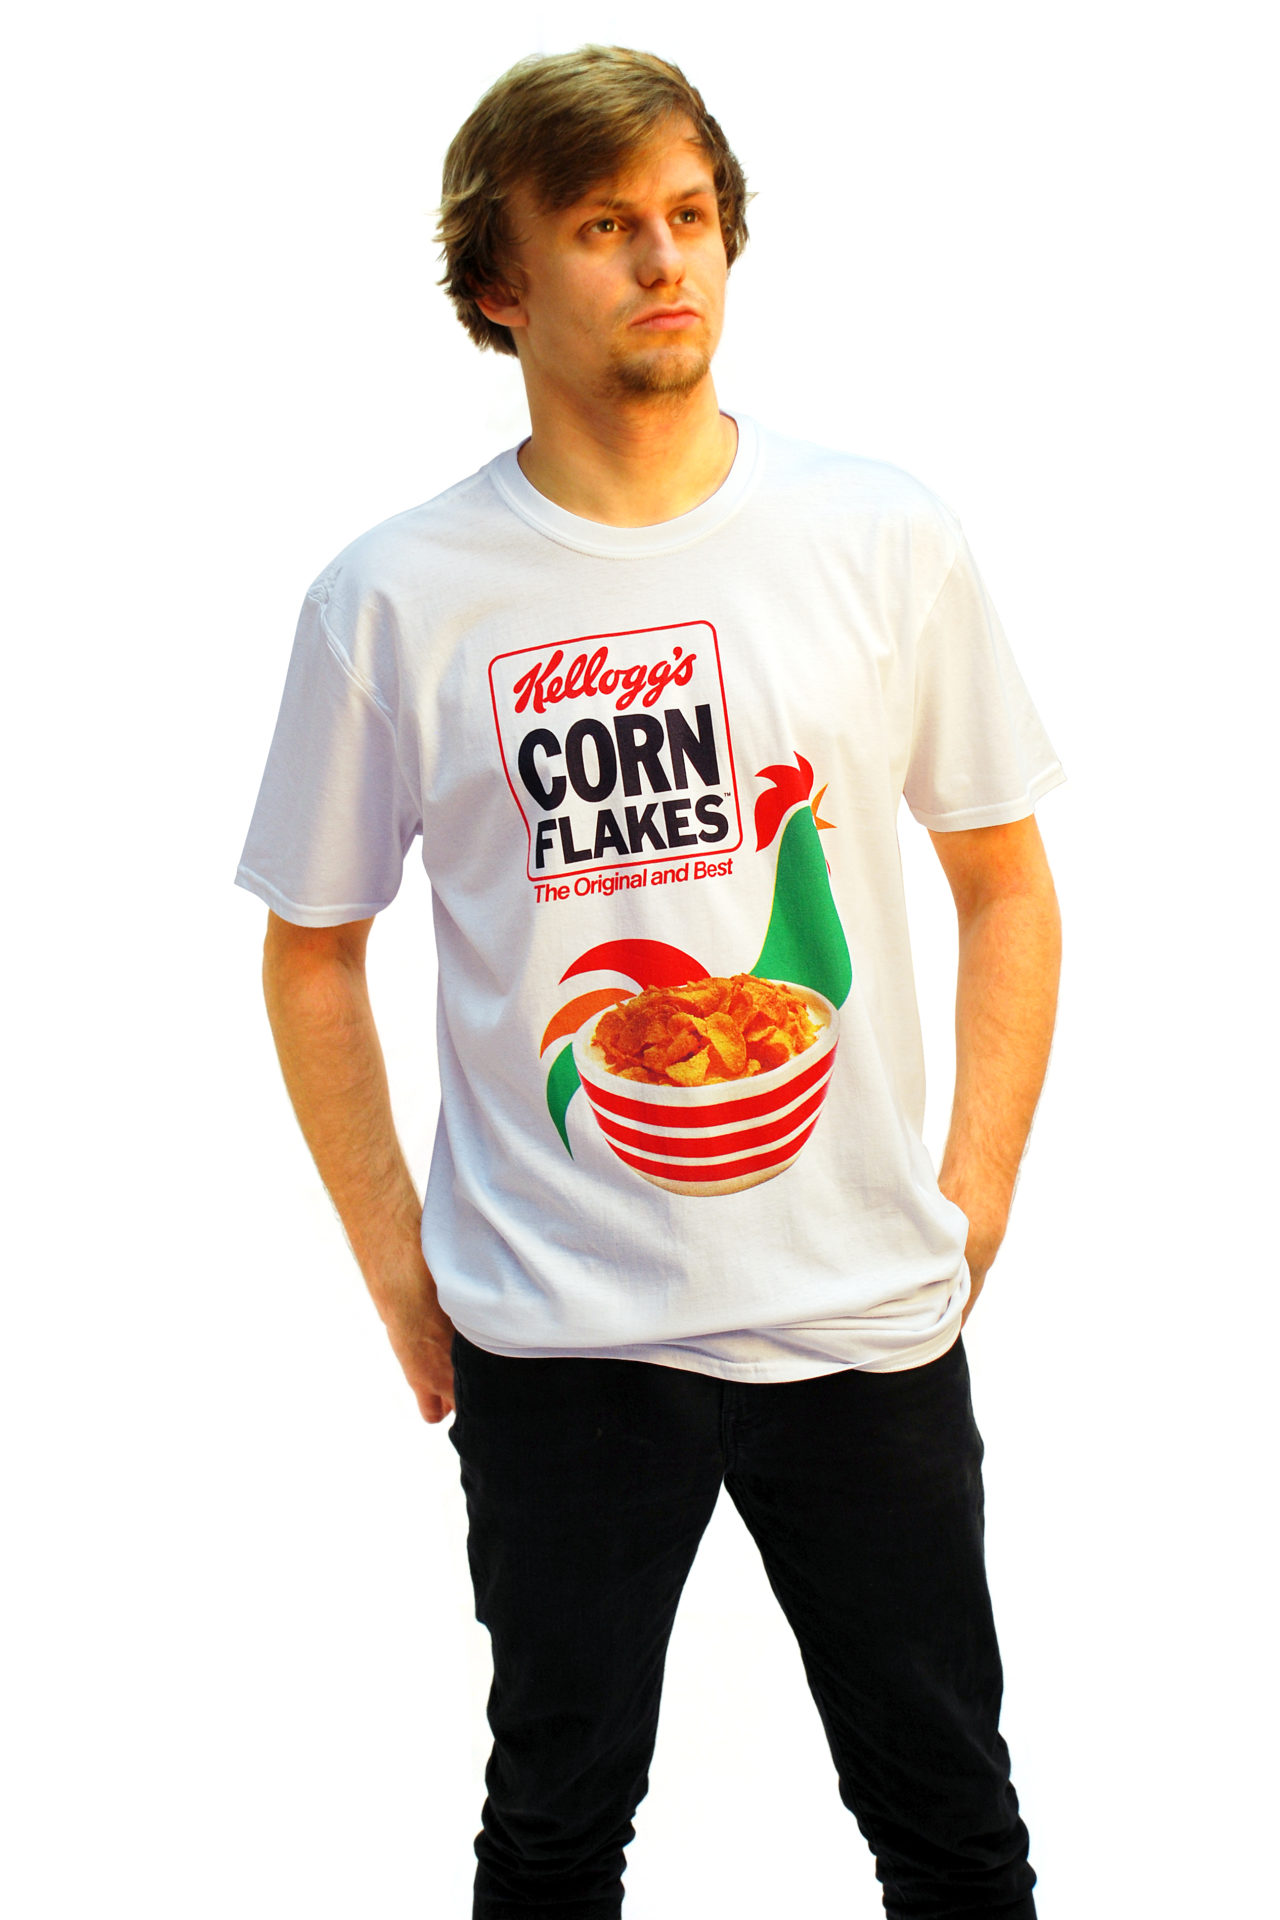 Kelloggs-Corn-Flakes-T-Shirt-James-W